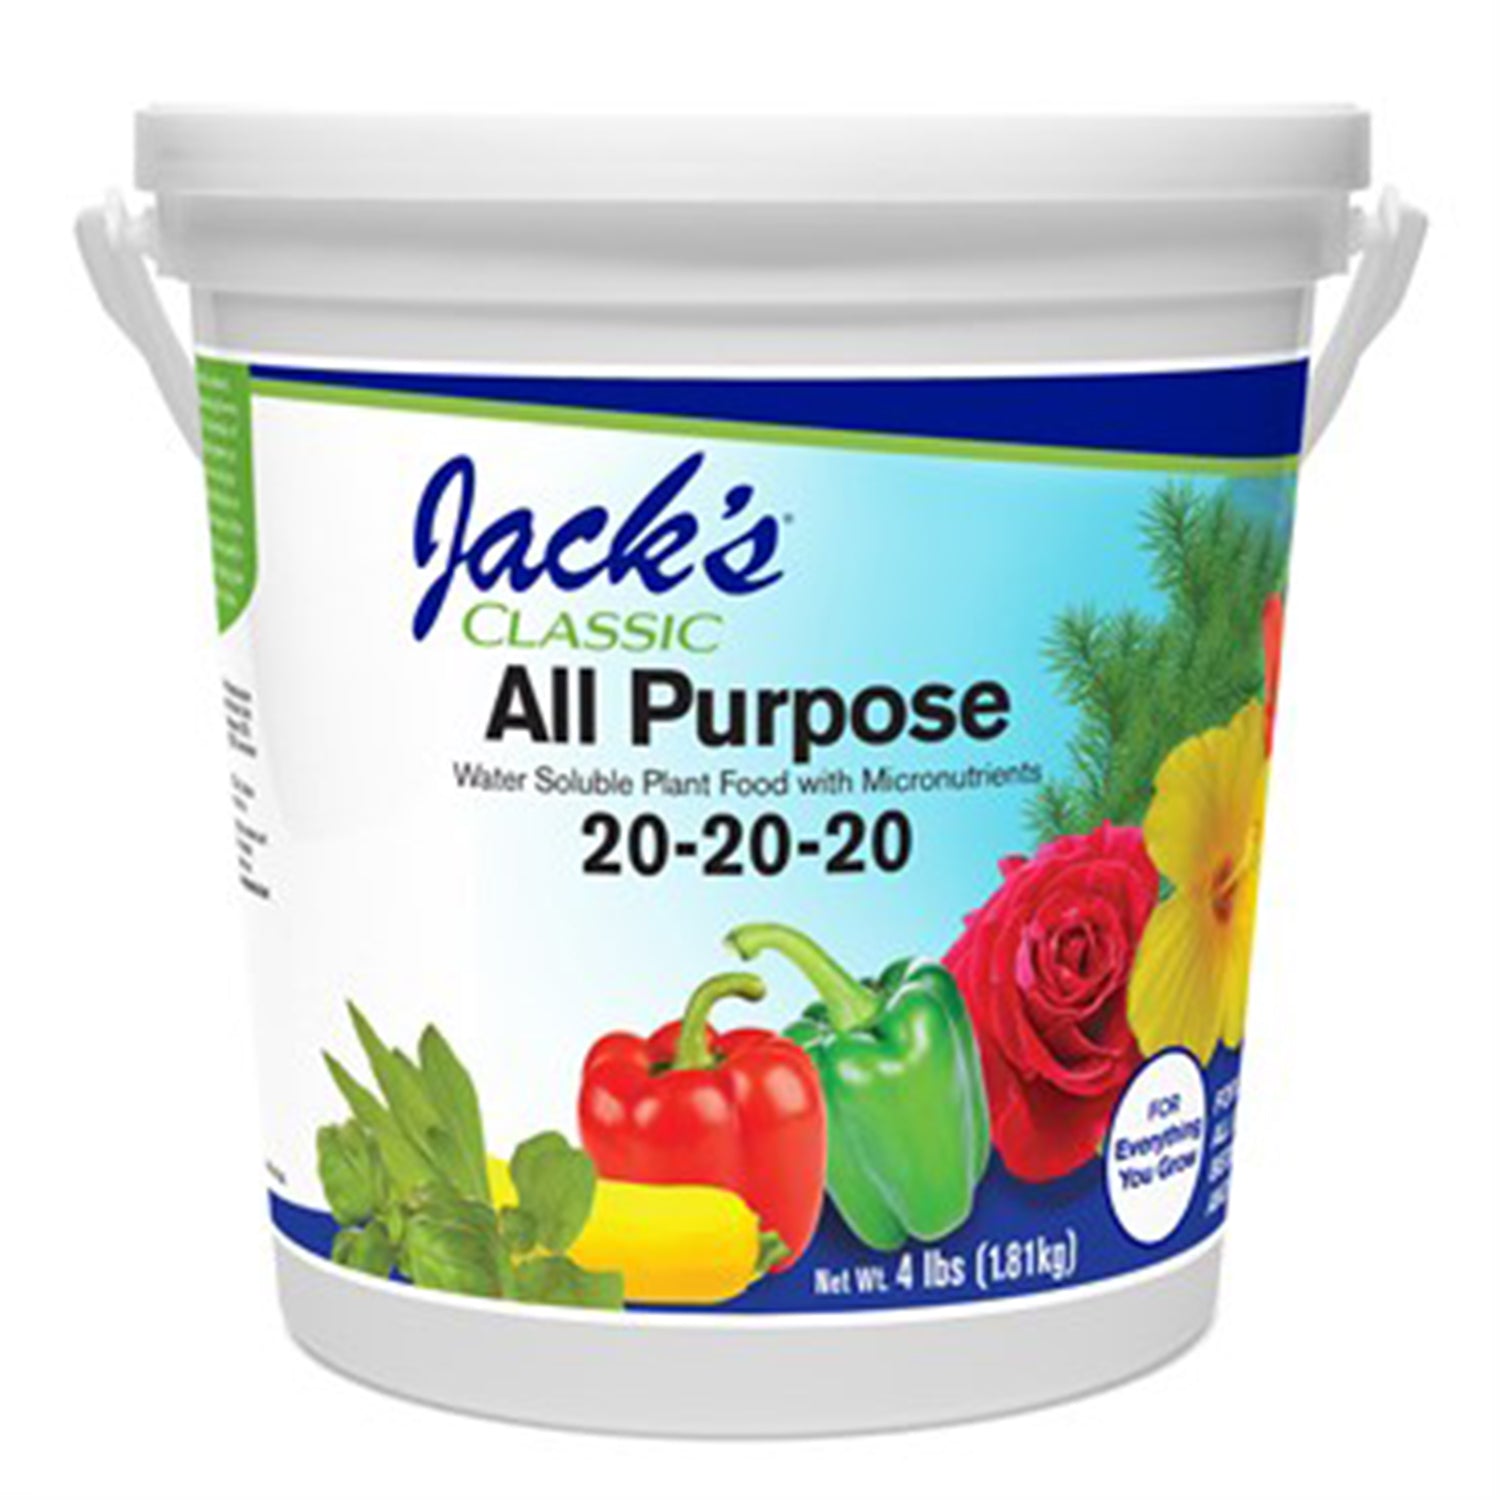 Jack's Classic All Purpose (20-20-20) - 4lbs